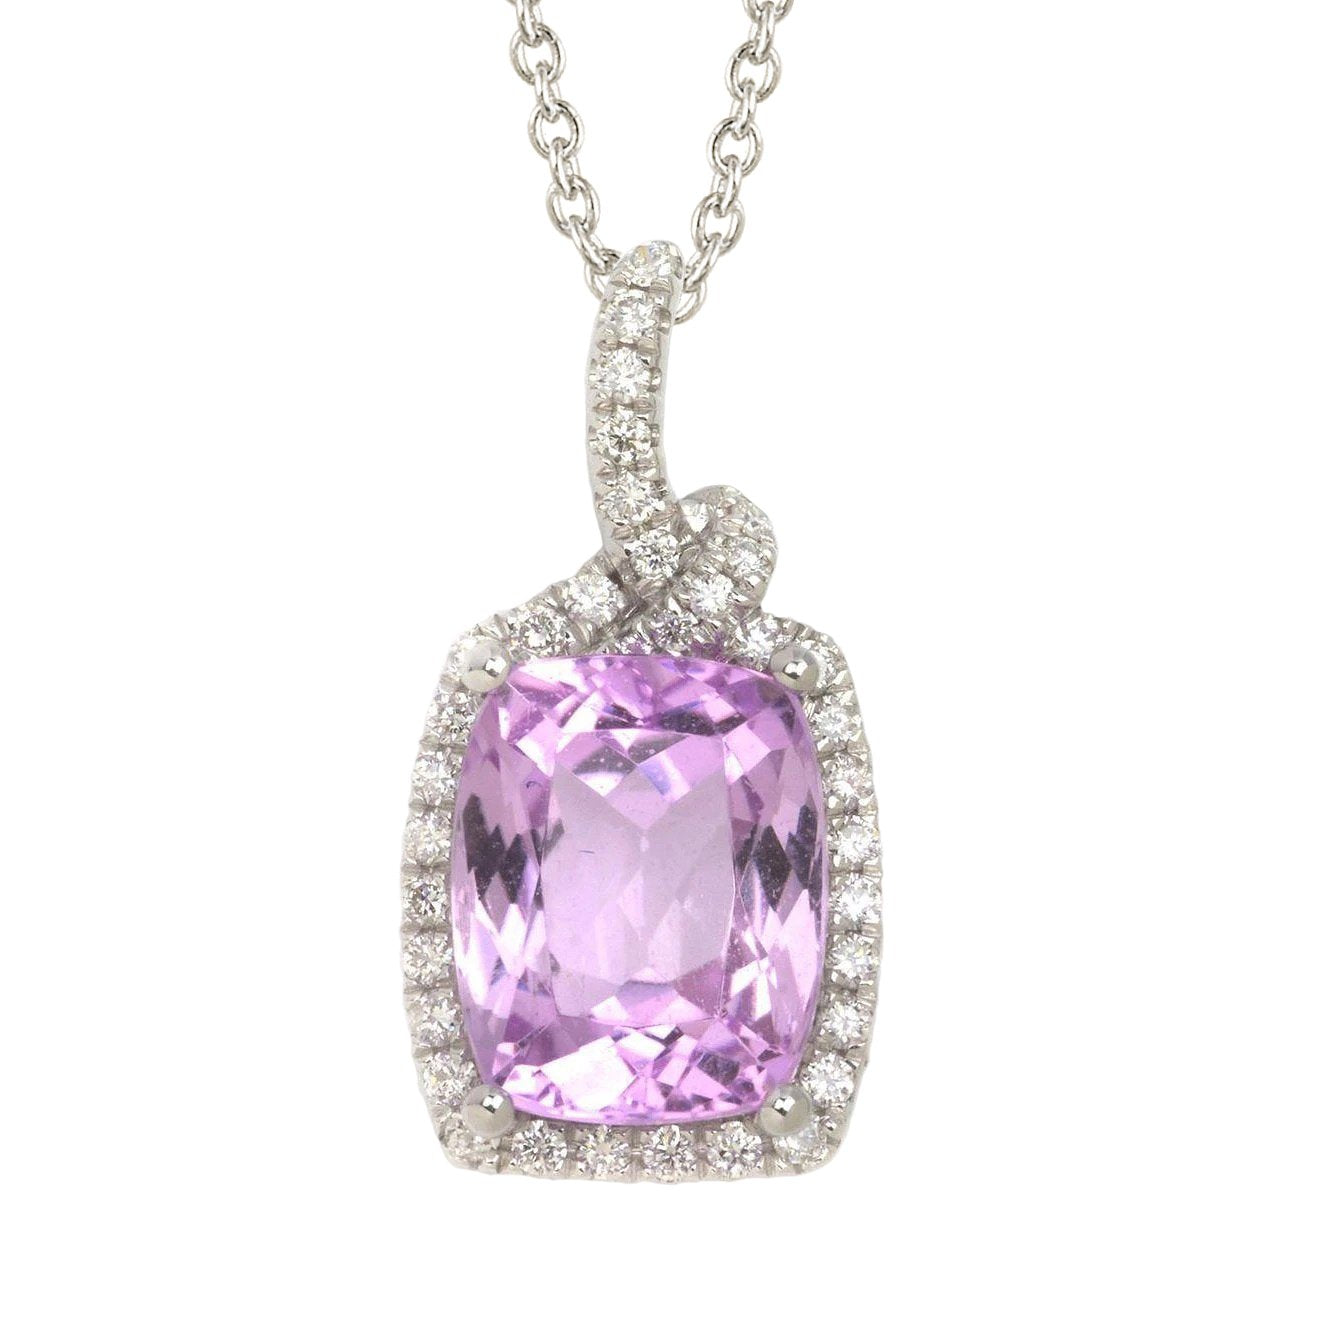 22 Ct Natural Kunzite And Diamond Necklace Pendant White Gold 14K - Gemstone Pendant-harrychadent.ca